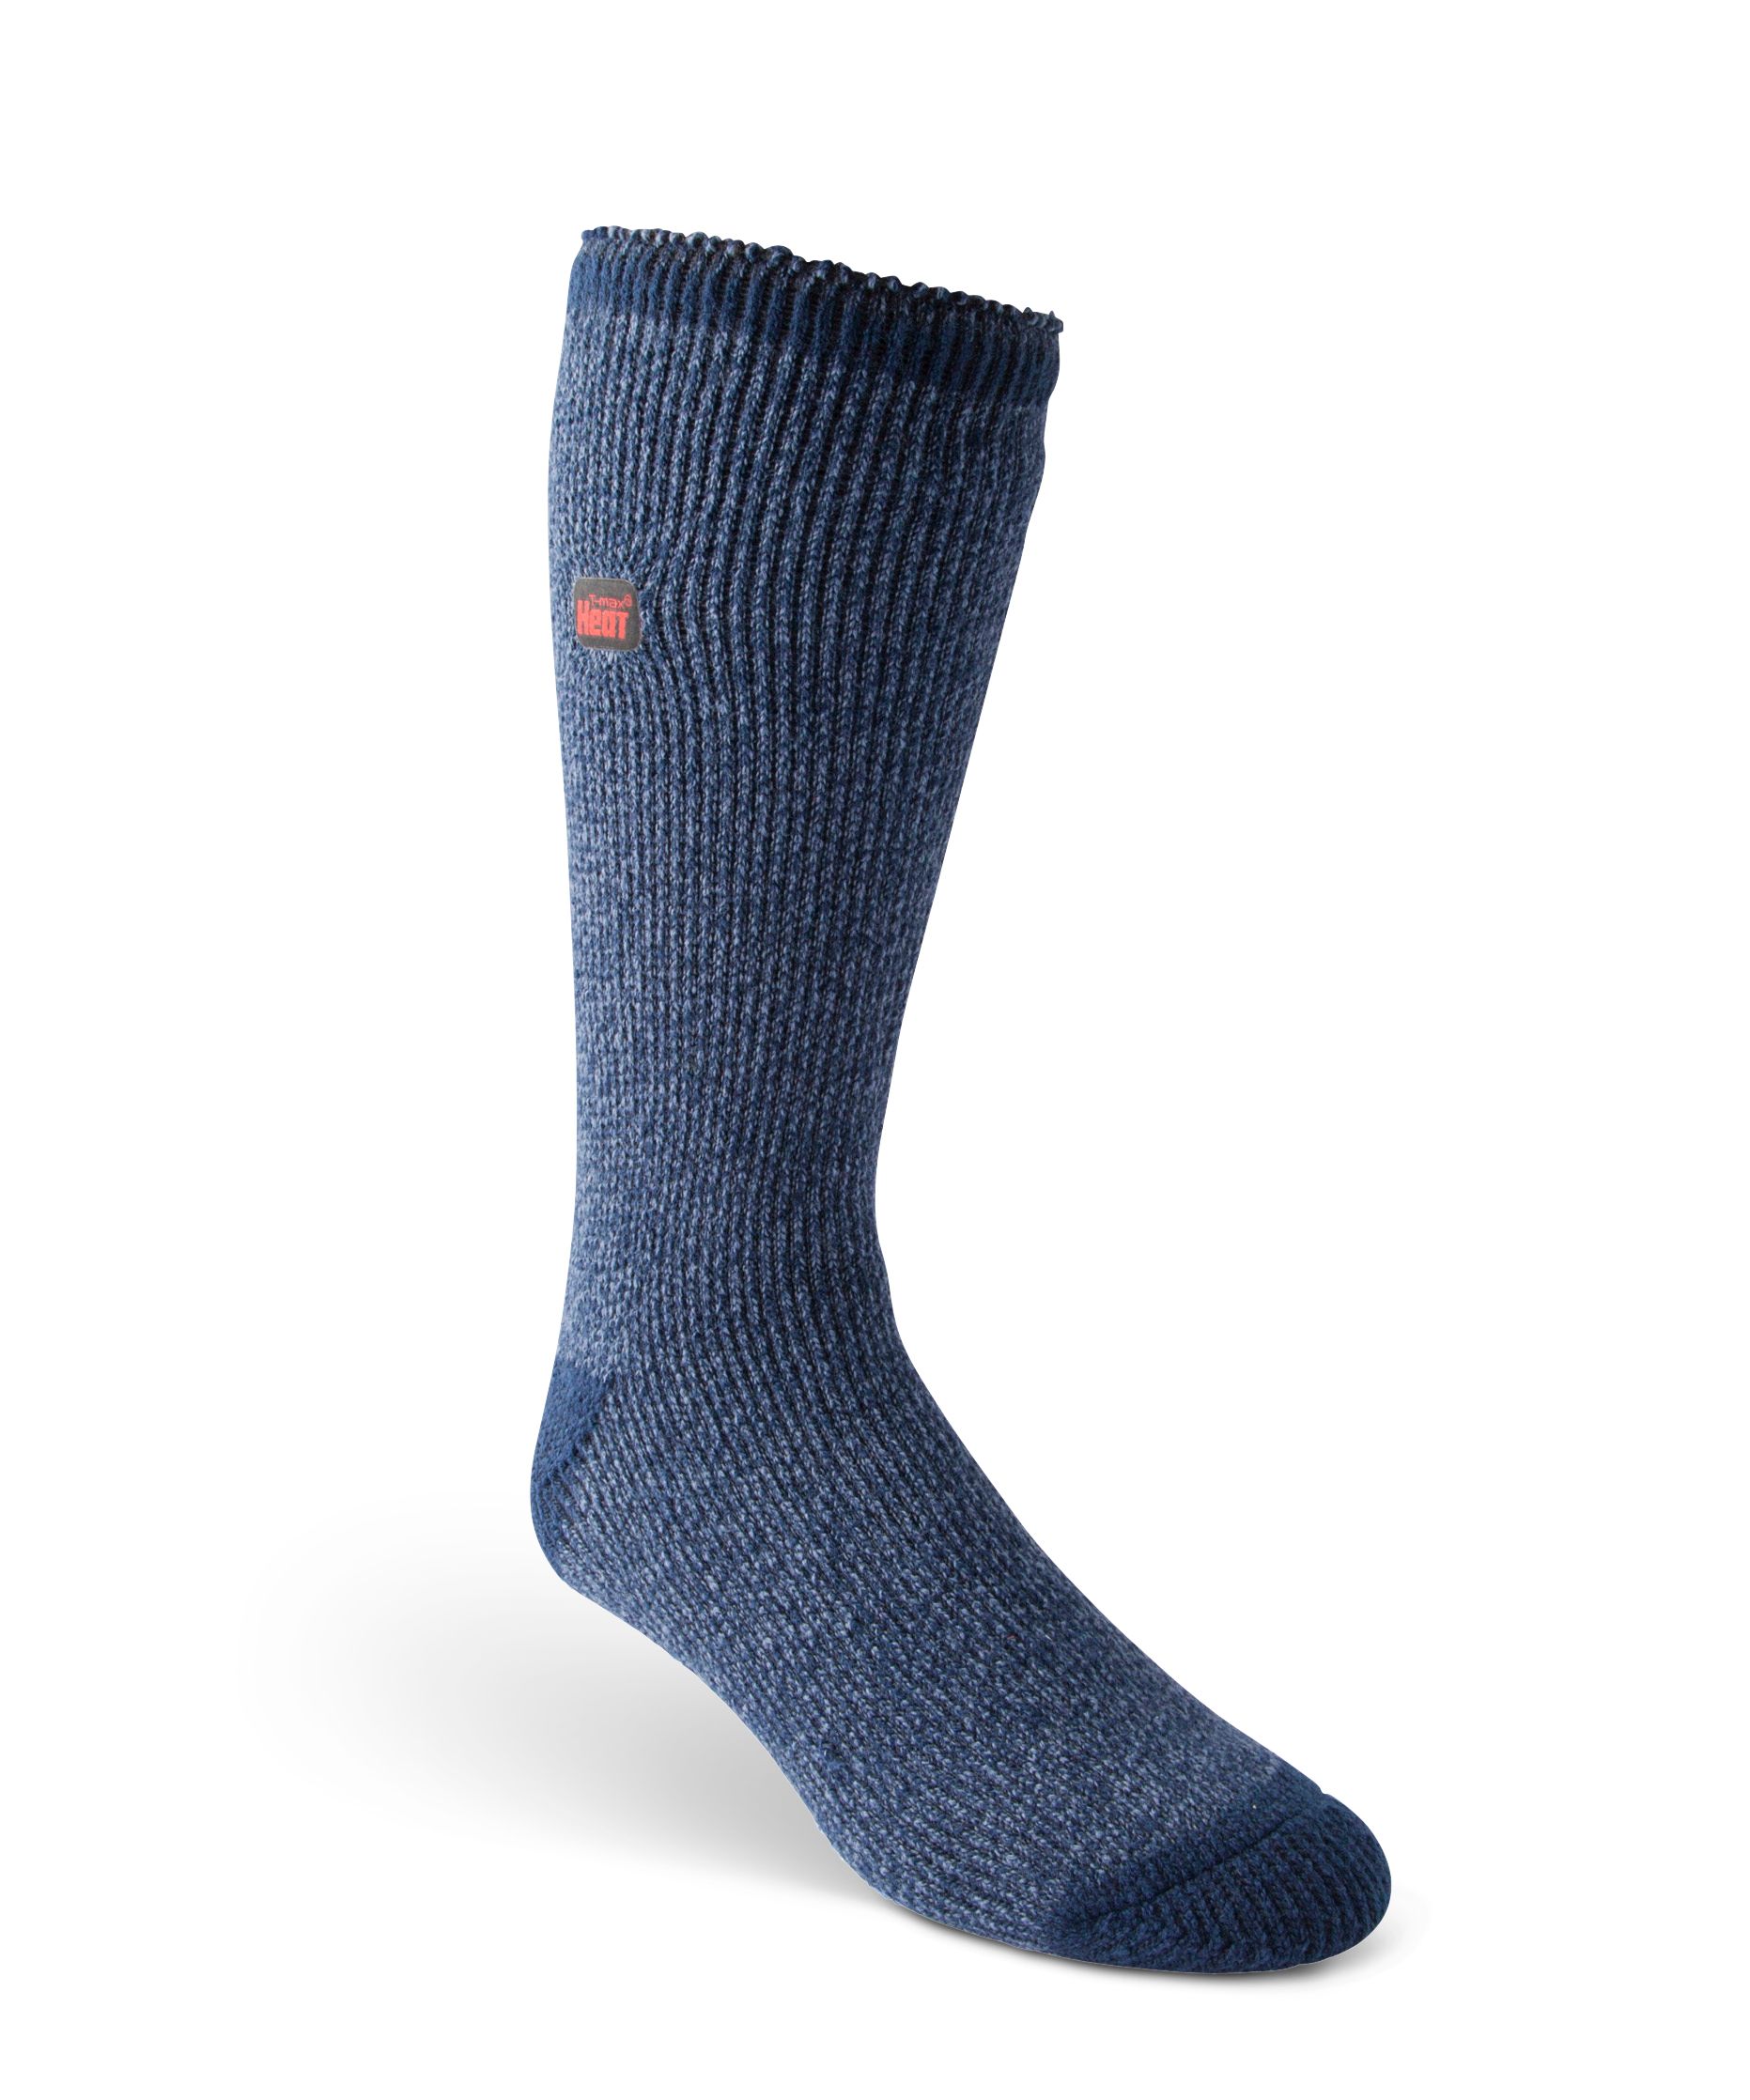 WindRiver Men's T-Max Heat Thermal Large King Size Socks